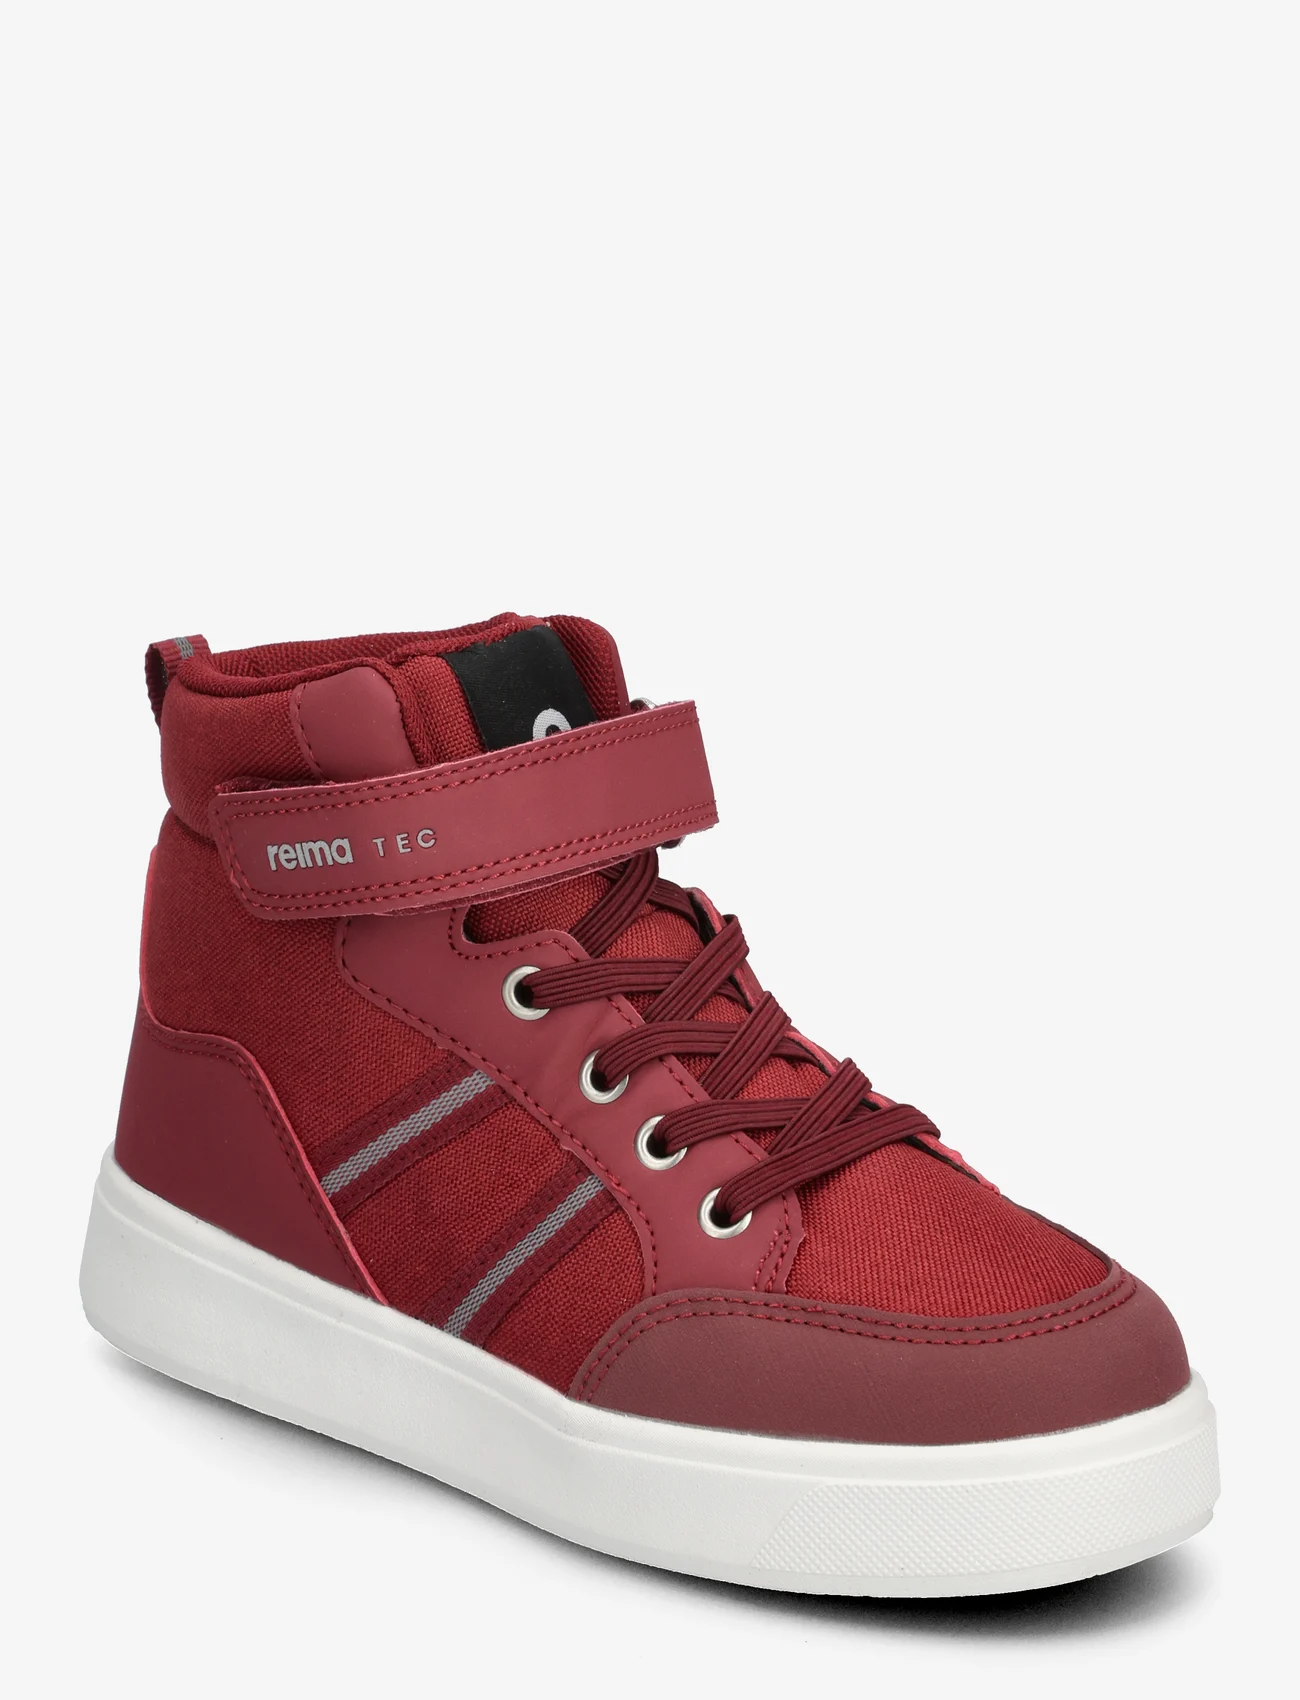 Reima - Reimatec sneakers, Skeitti - high tops - jam red - 0